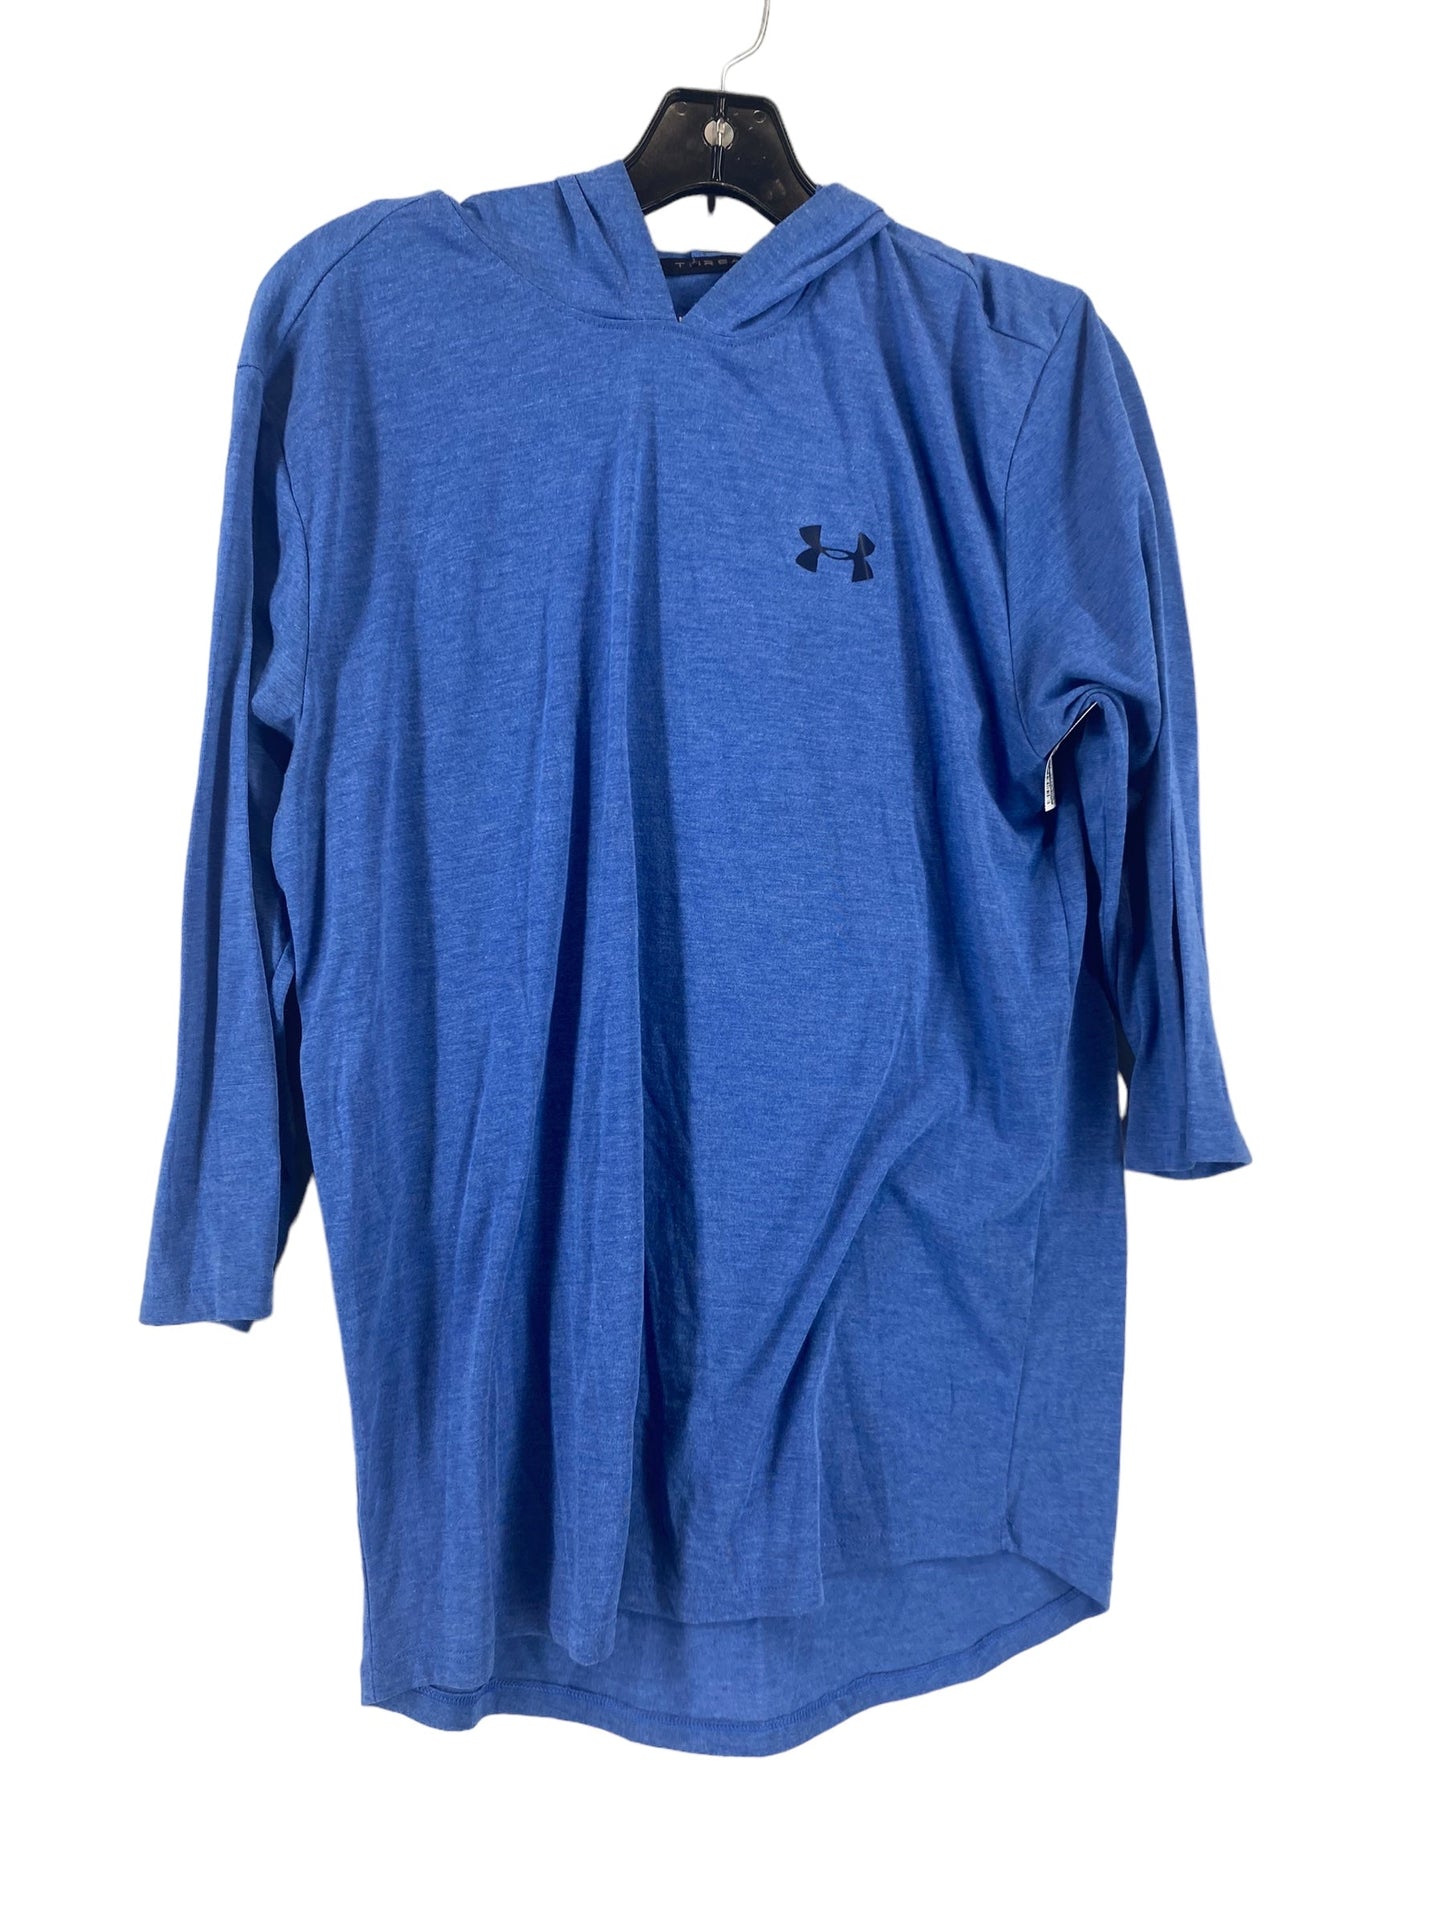 Blue Athletic Top Long Sleeve Hoodie Adidas, Size M